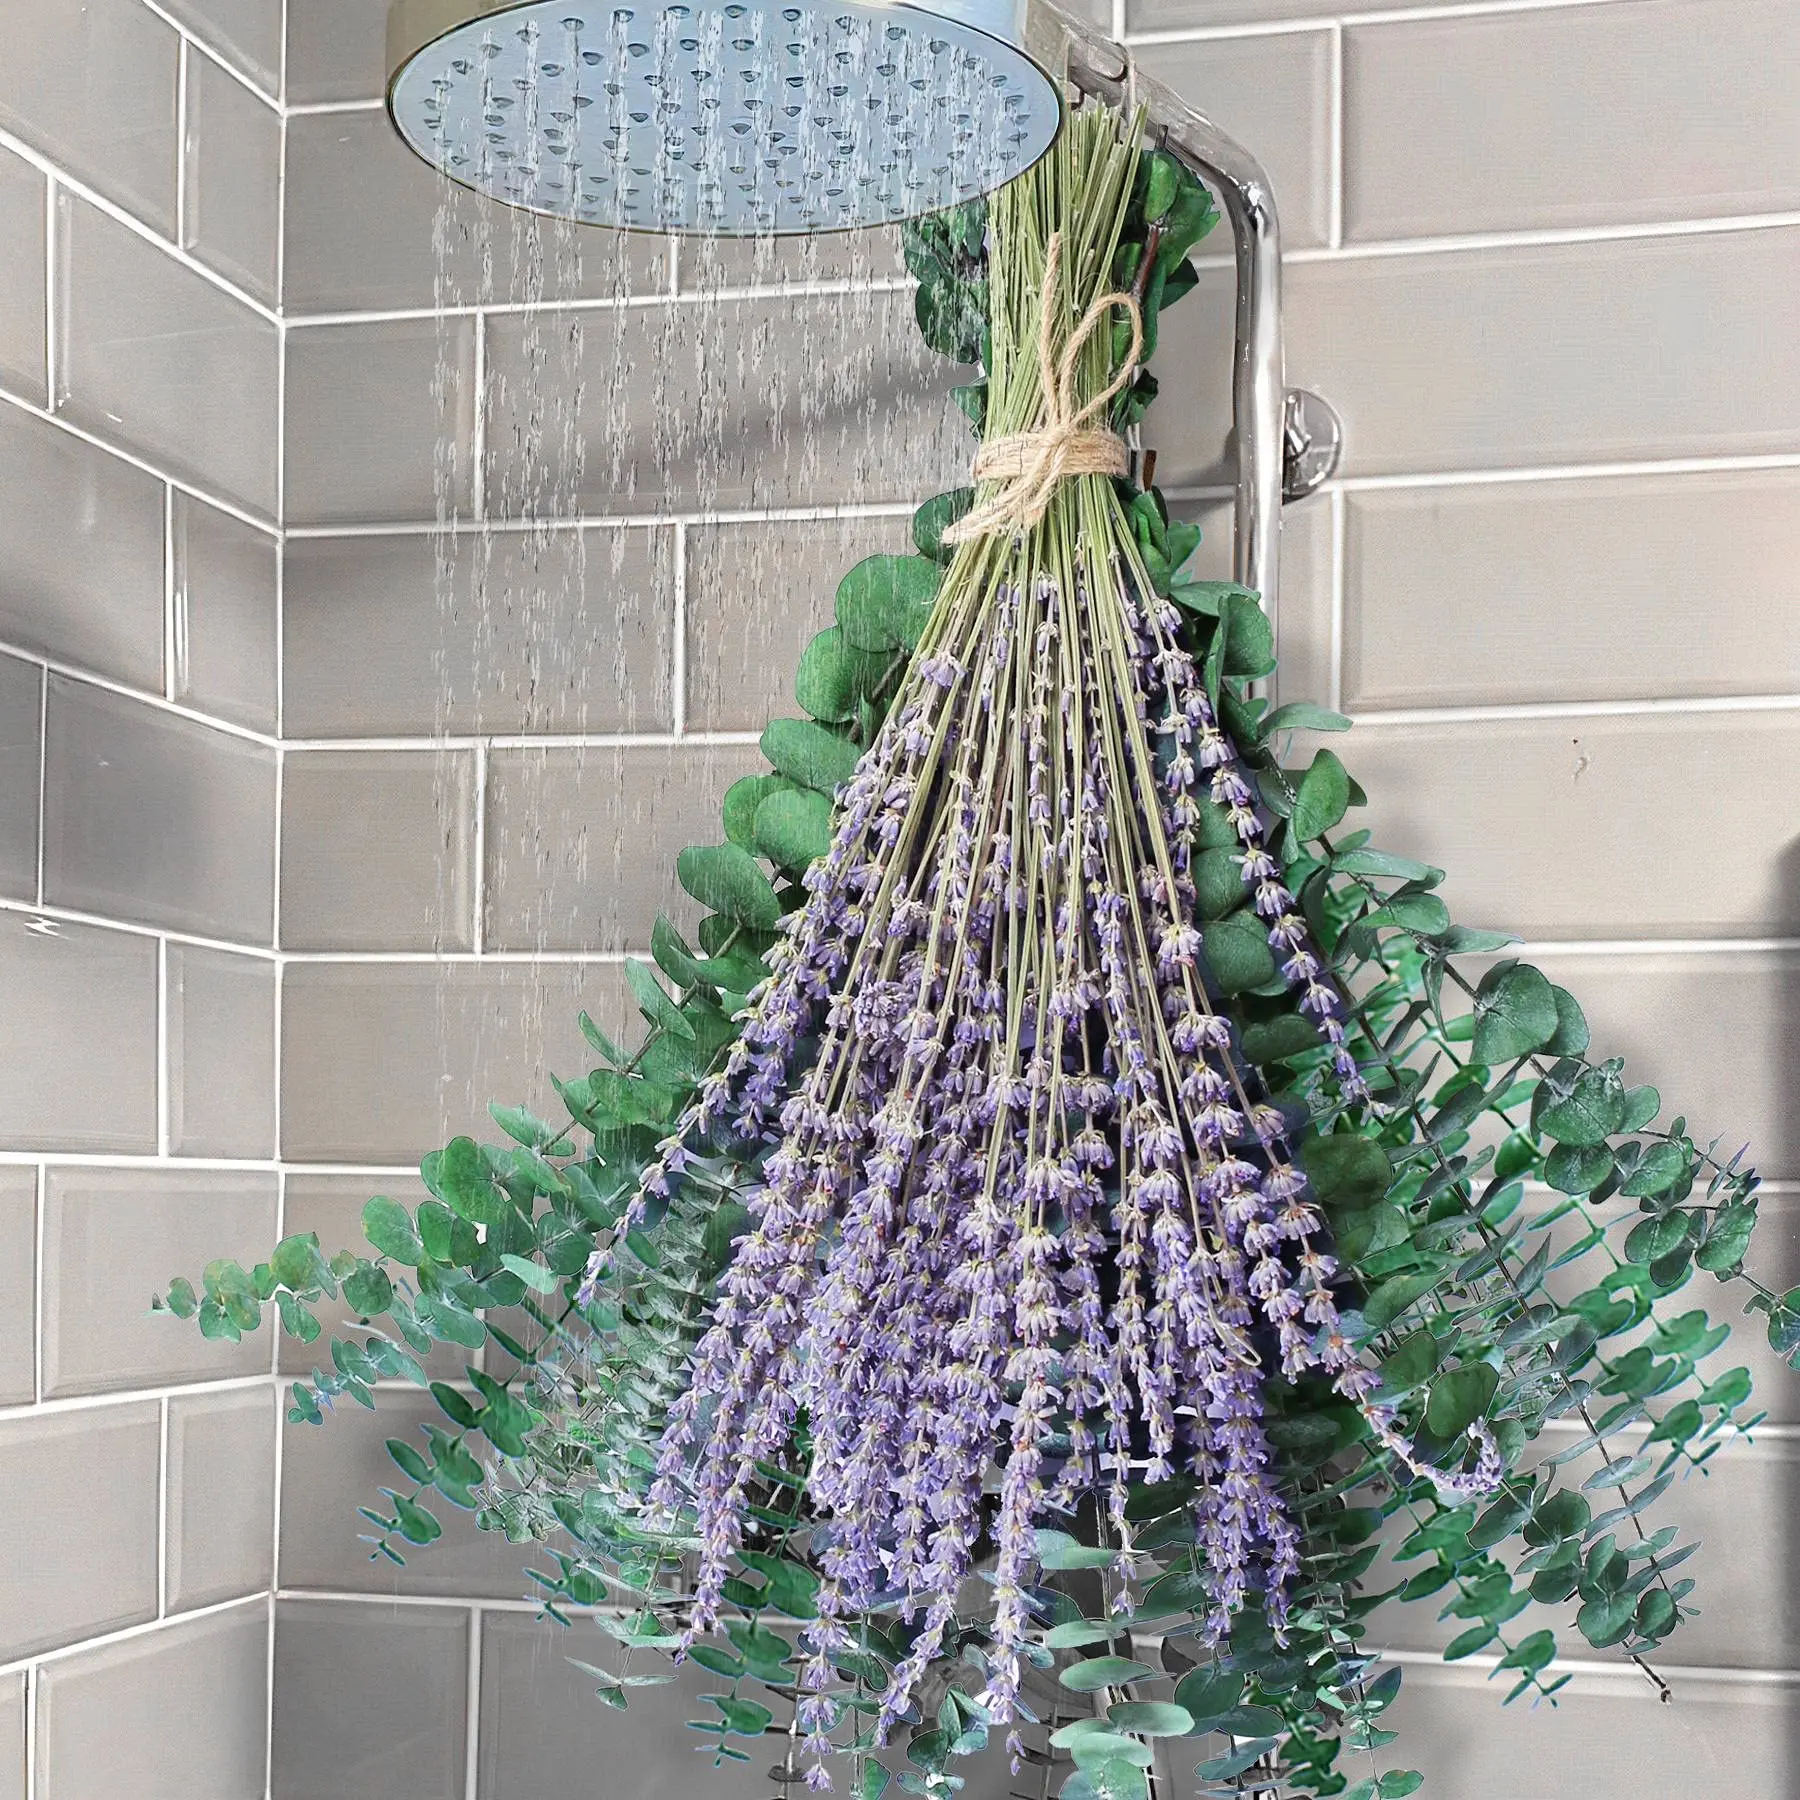 

70 Pcs Natural Real Bouquet Preserved Eucalyptus Leaves & Dried Lavender Bundles for Shower,Greenery Plant, Fragrance,Vase Decor